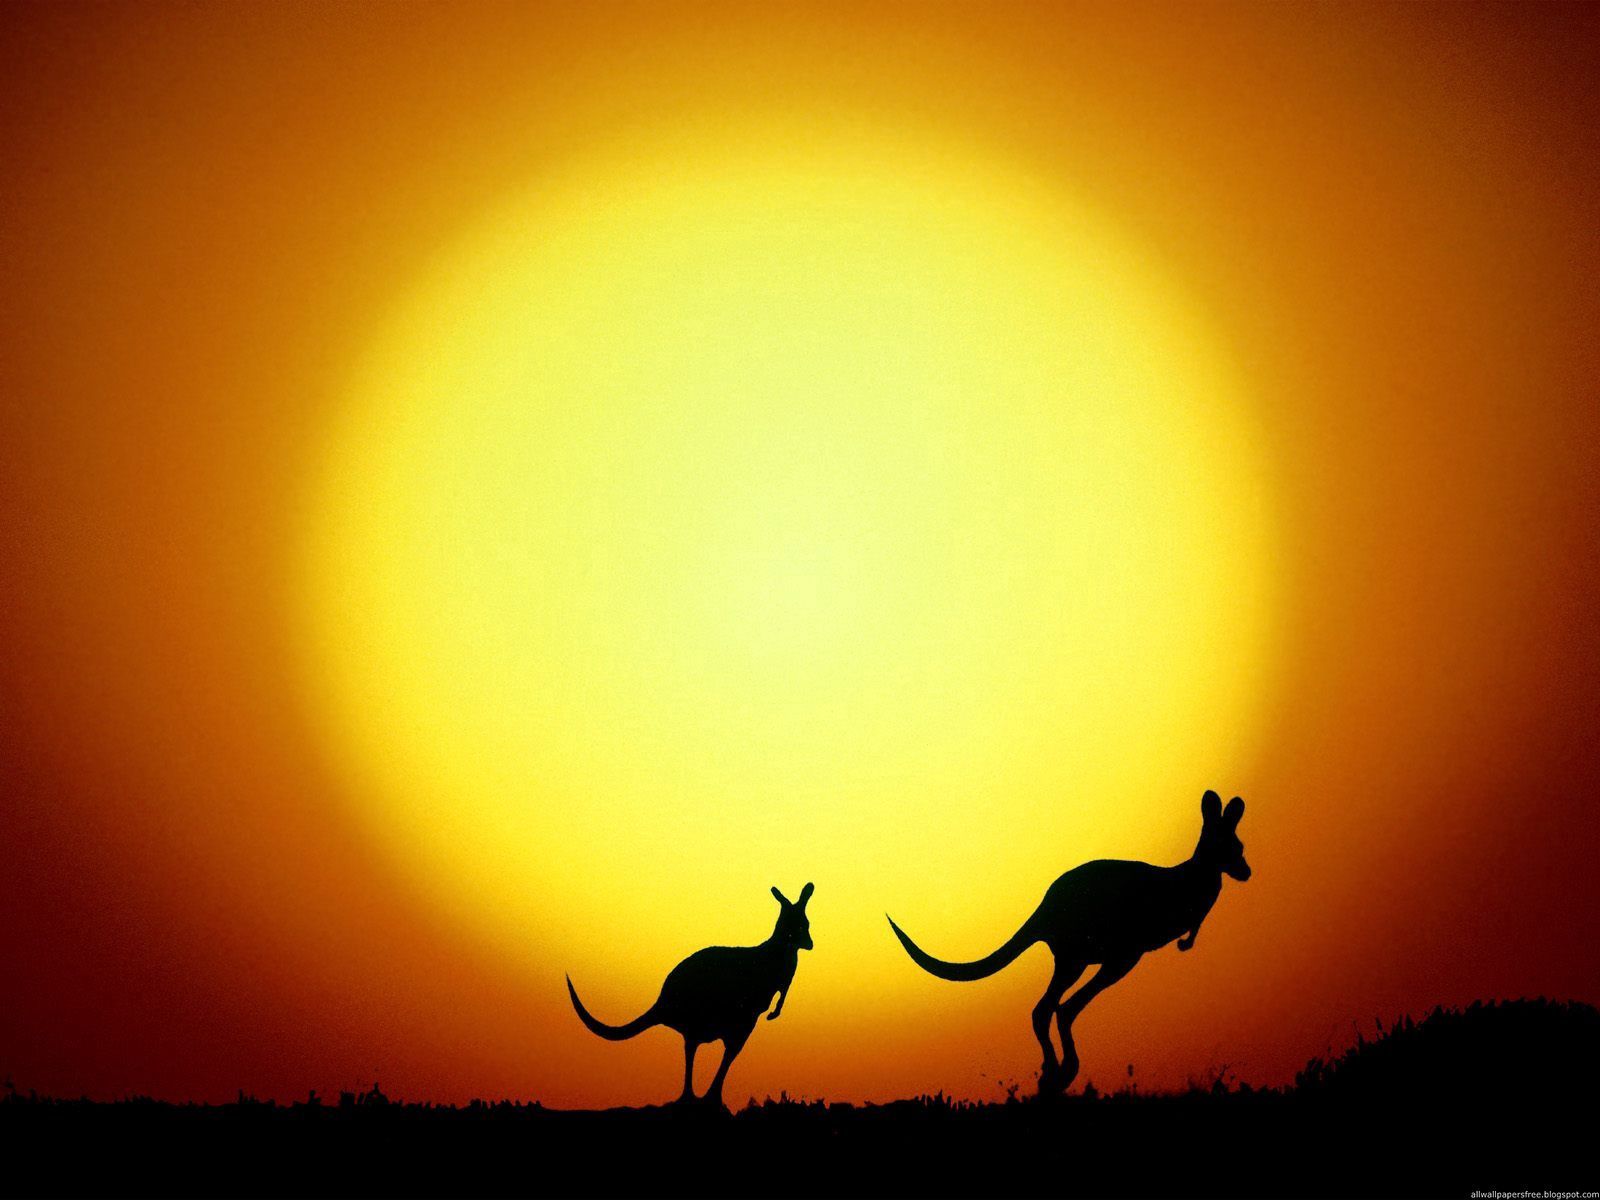 australia, nature, sunset, kangaroo, silhouettes, evening